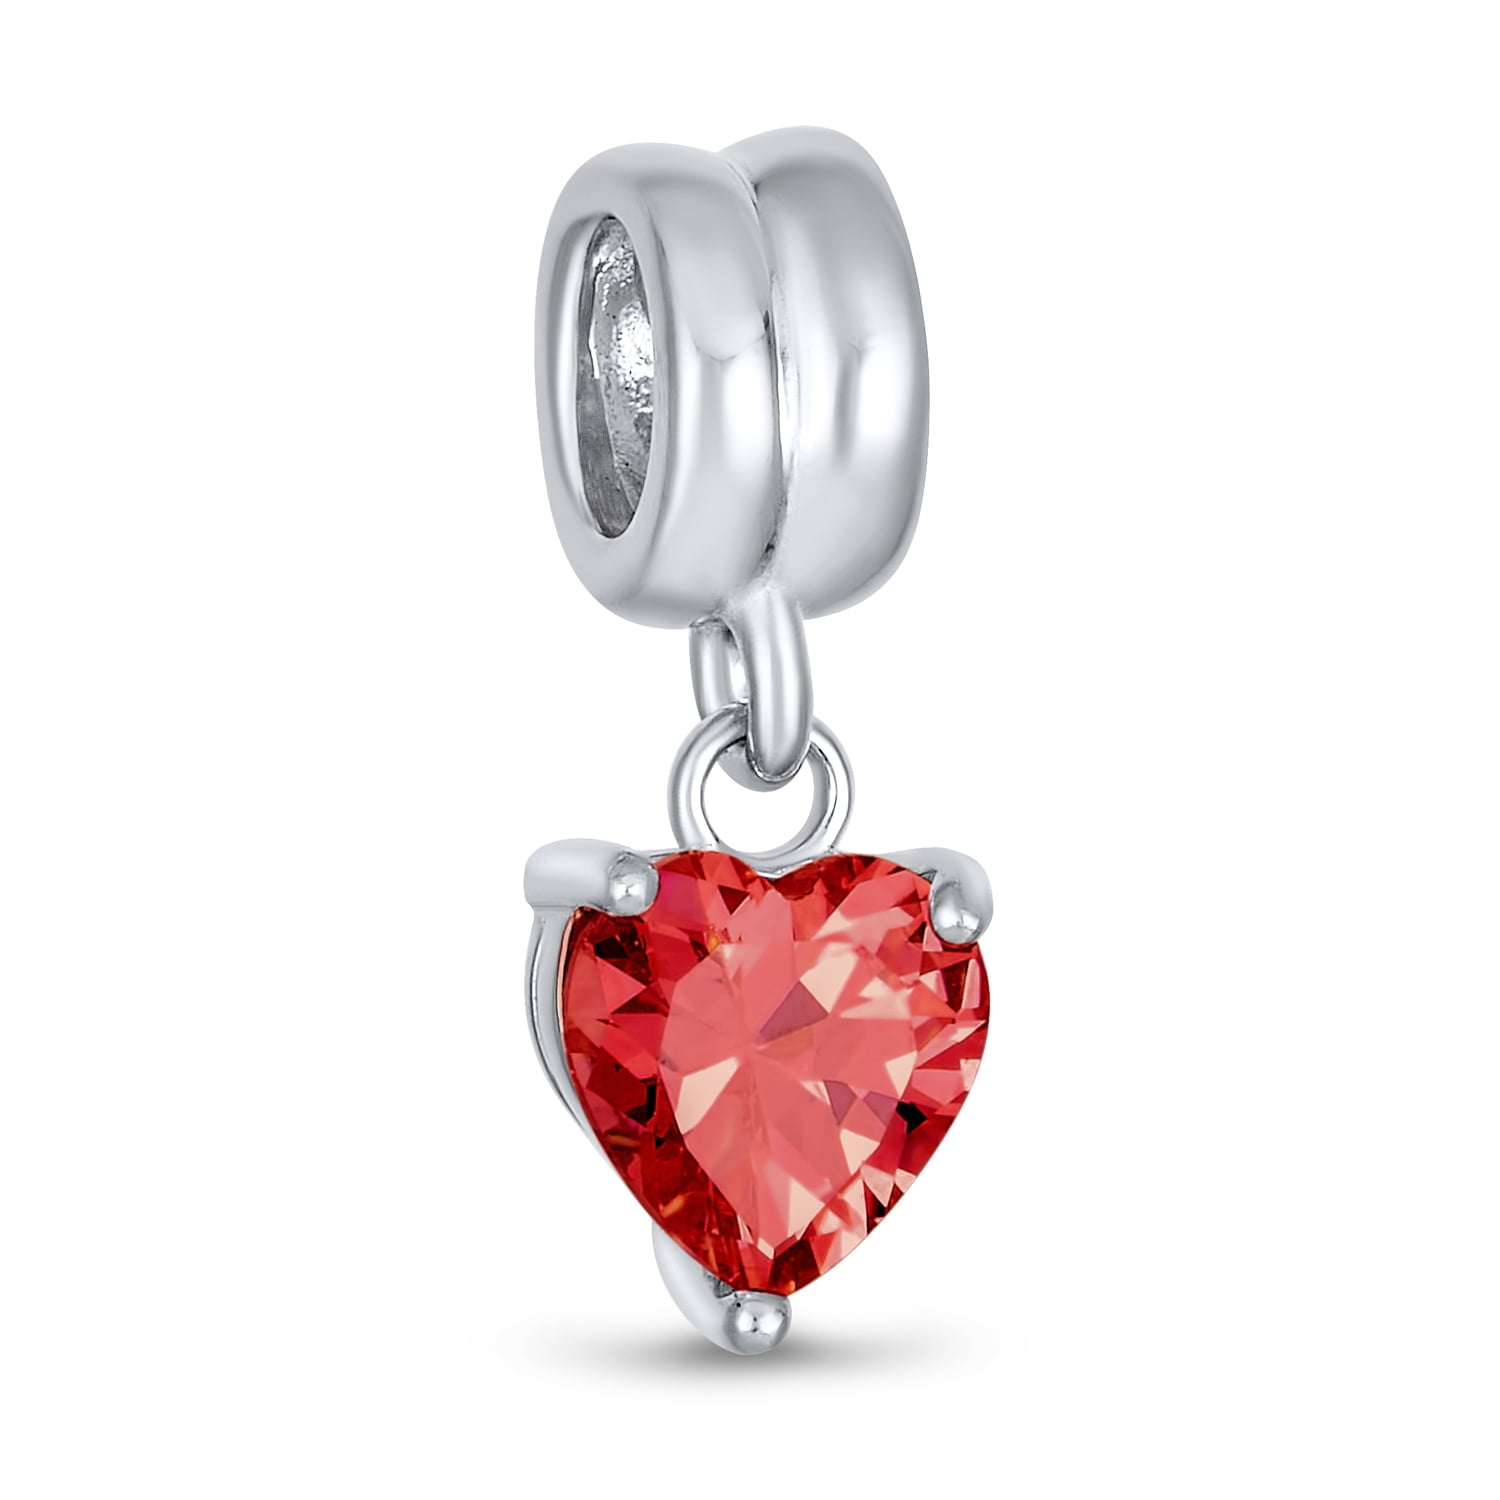 Heart Evil Eye Purple Crystal Birthstone 925 Sterling Silver Charm Bead Fits European Brand Charms Jewelry